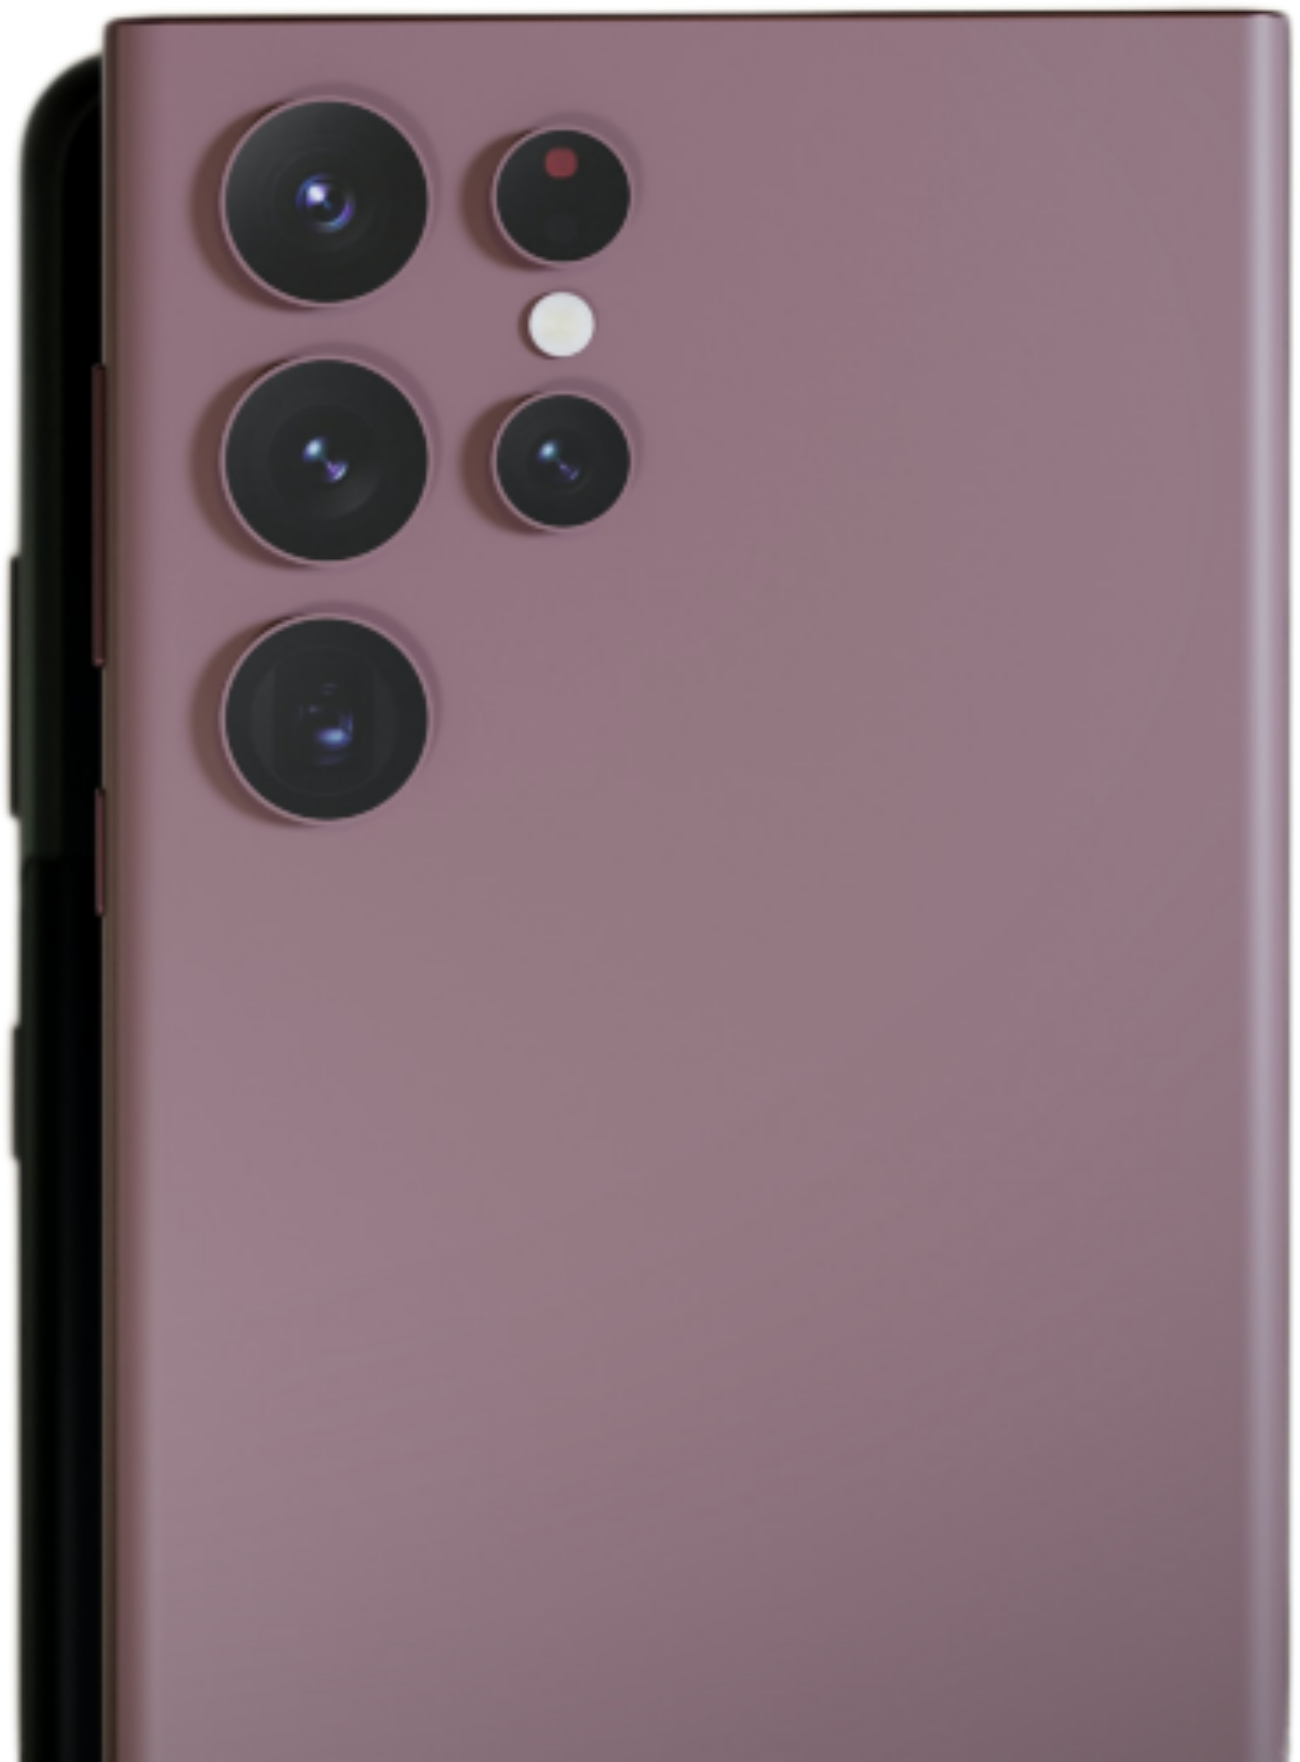 purple phone